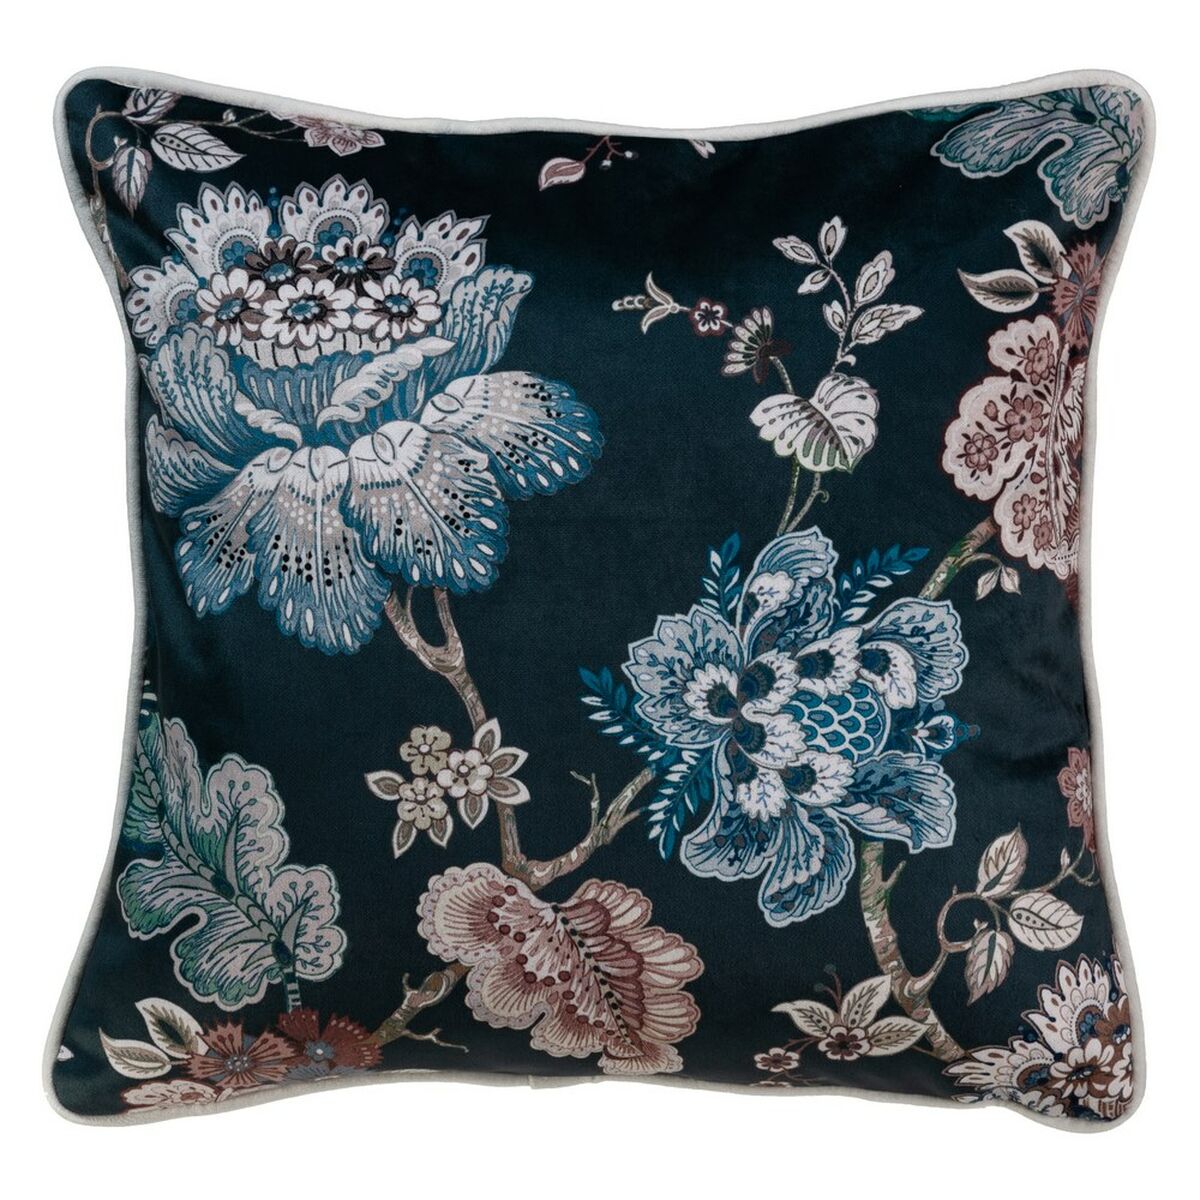 Cushion Flowers 45 x 45 cm